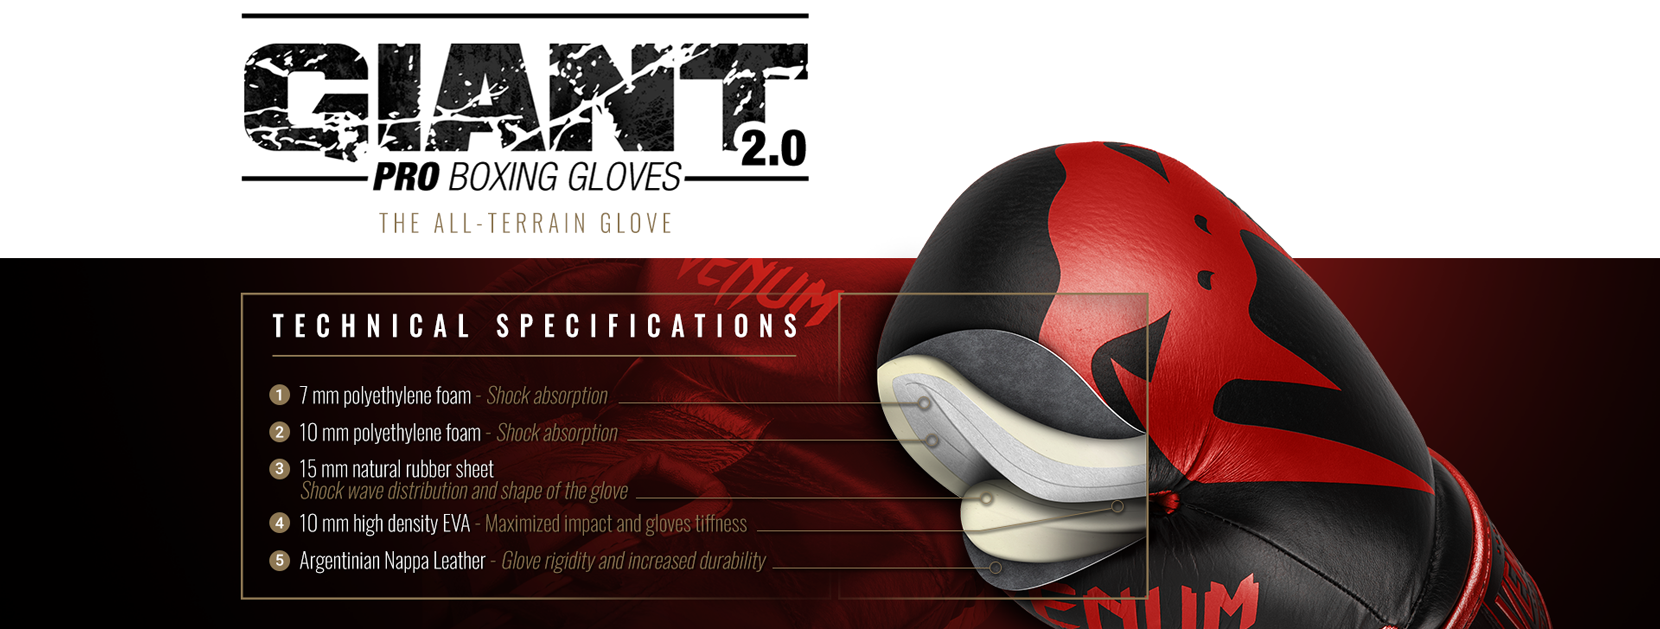 Giant 2.0 Pro Boxing Gloves